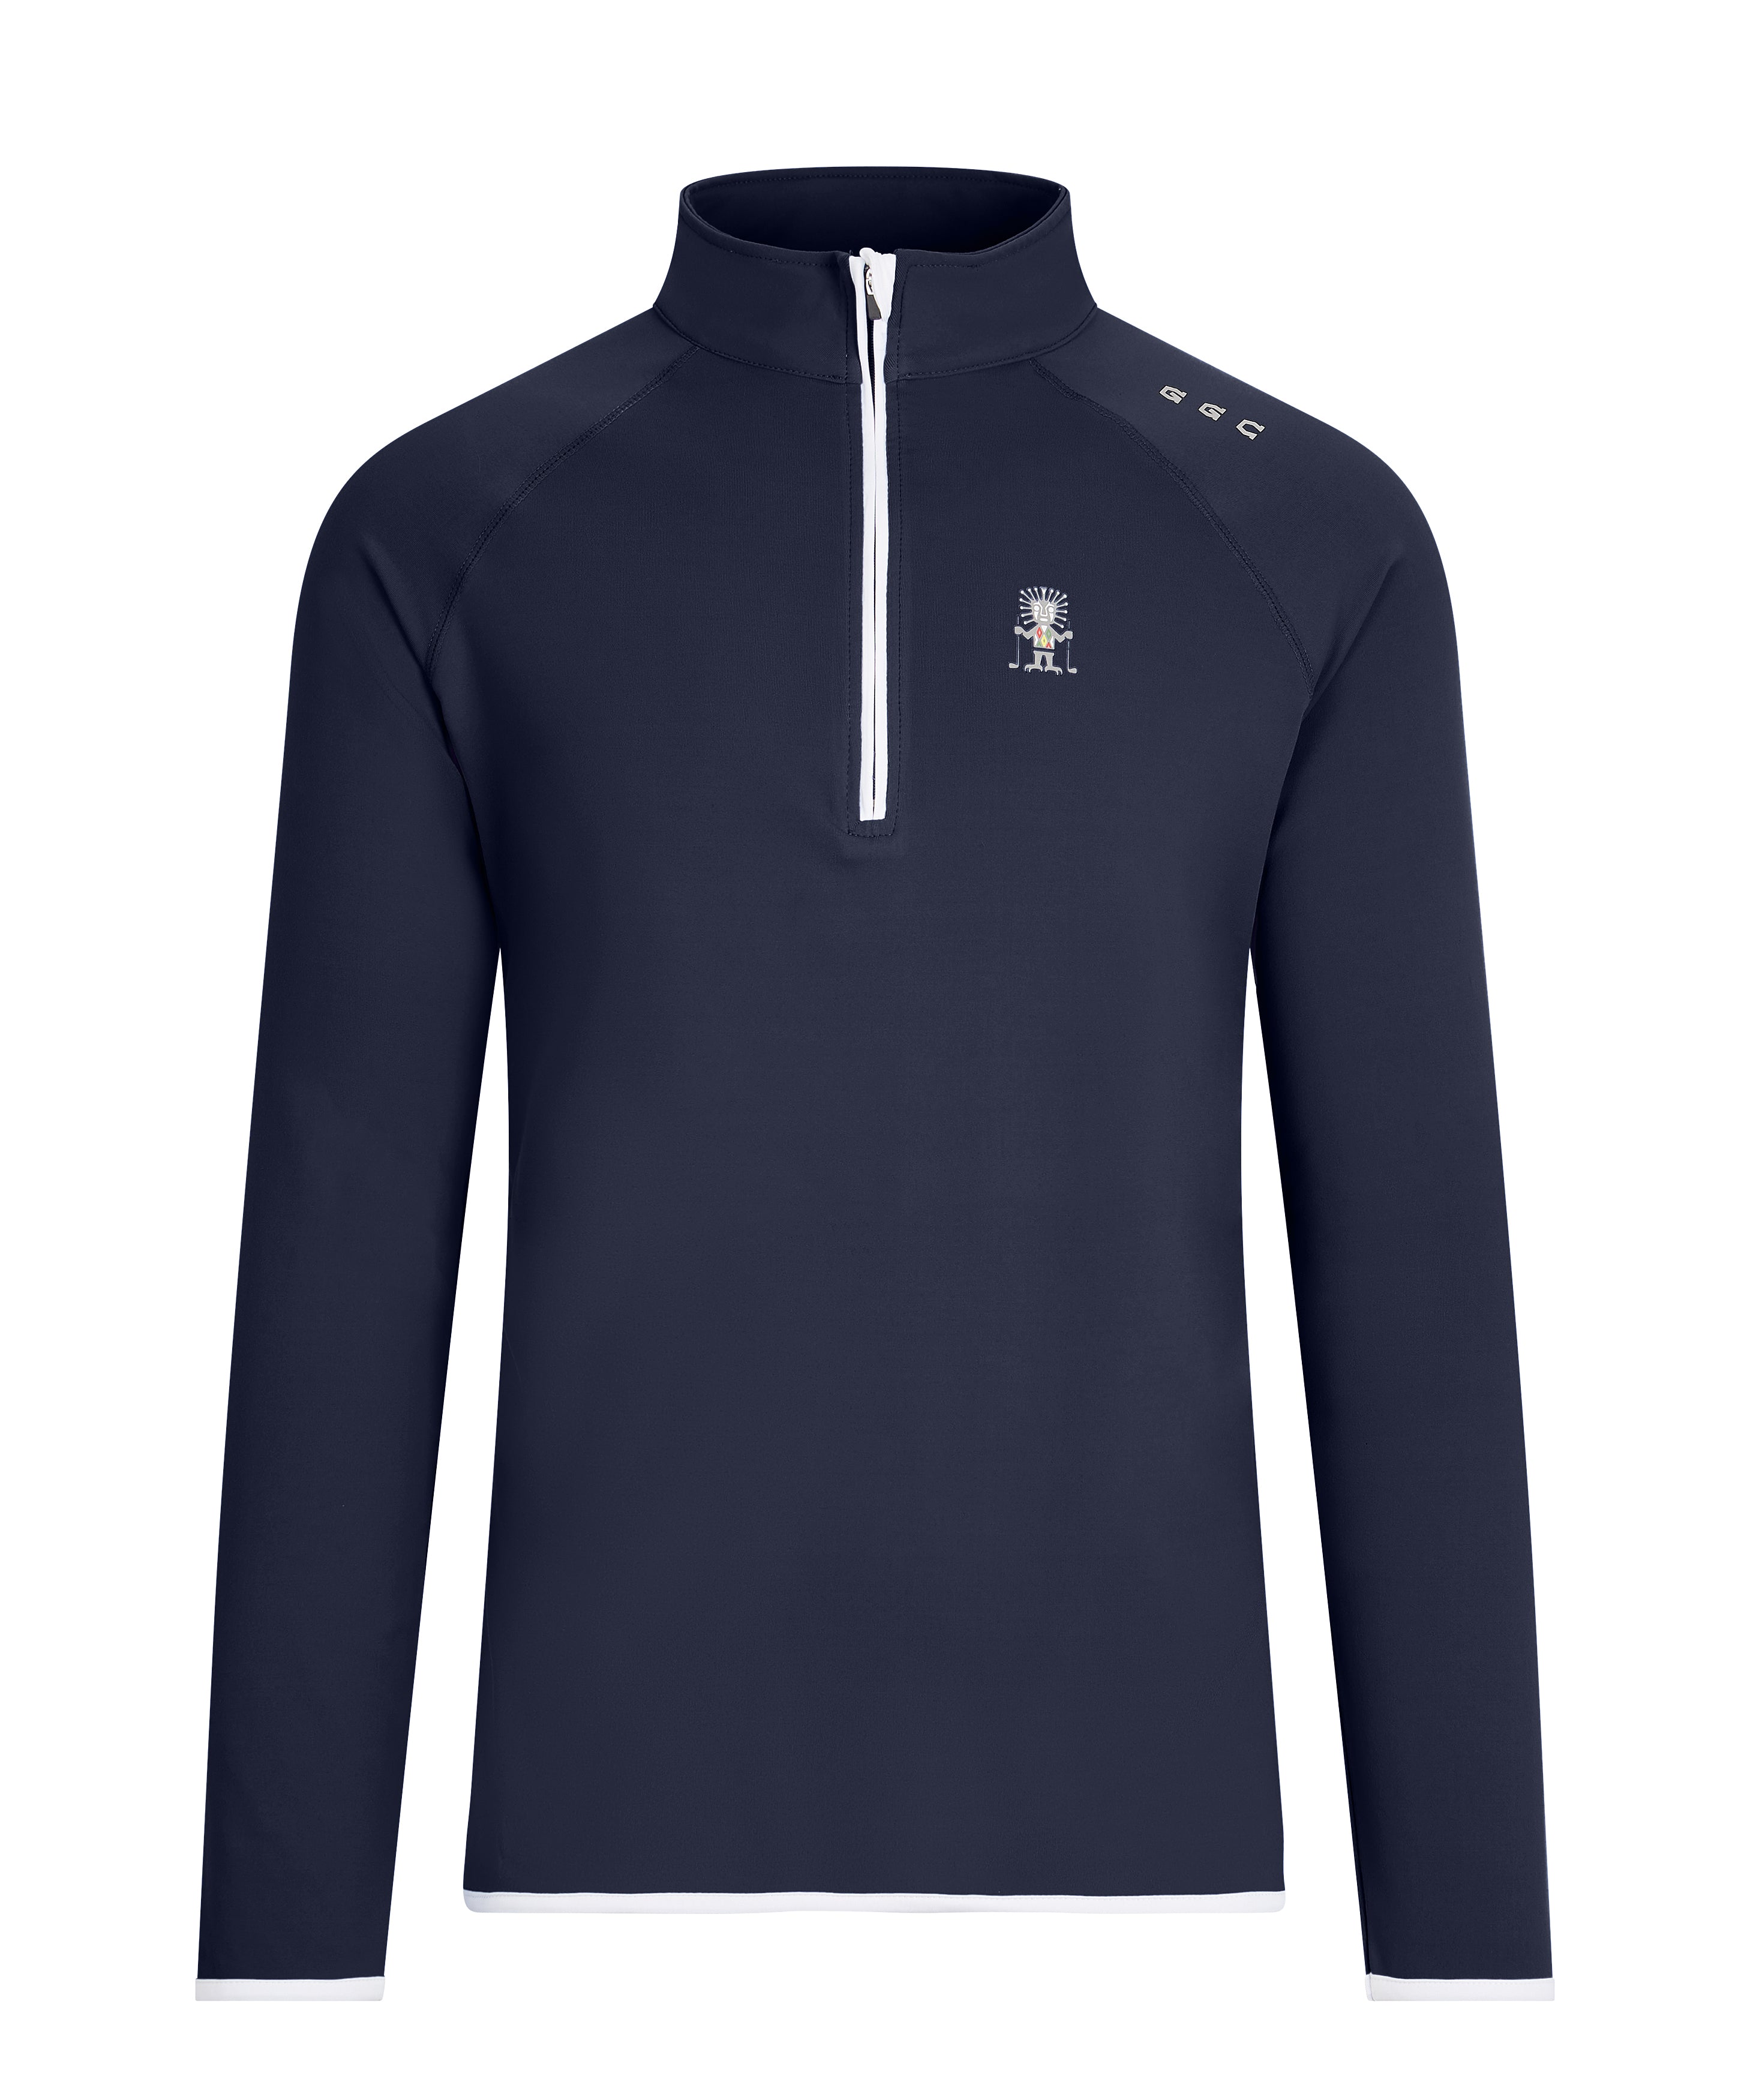 golf god clothing classic navy blue 1/4 zip mid layer